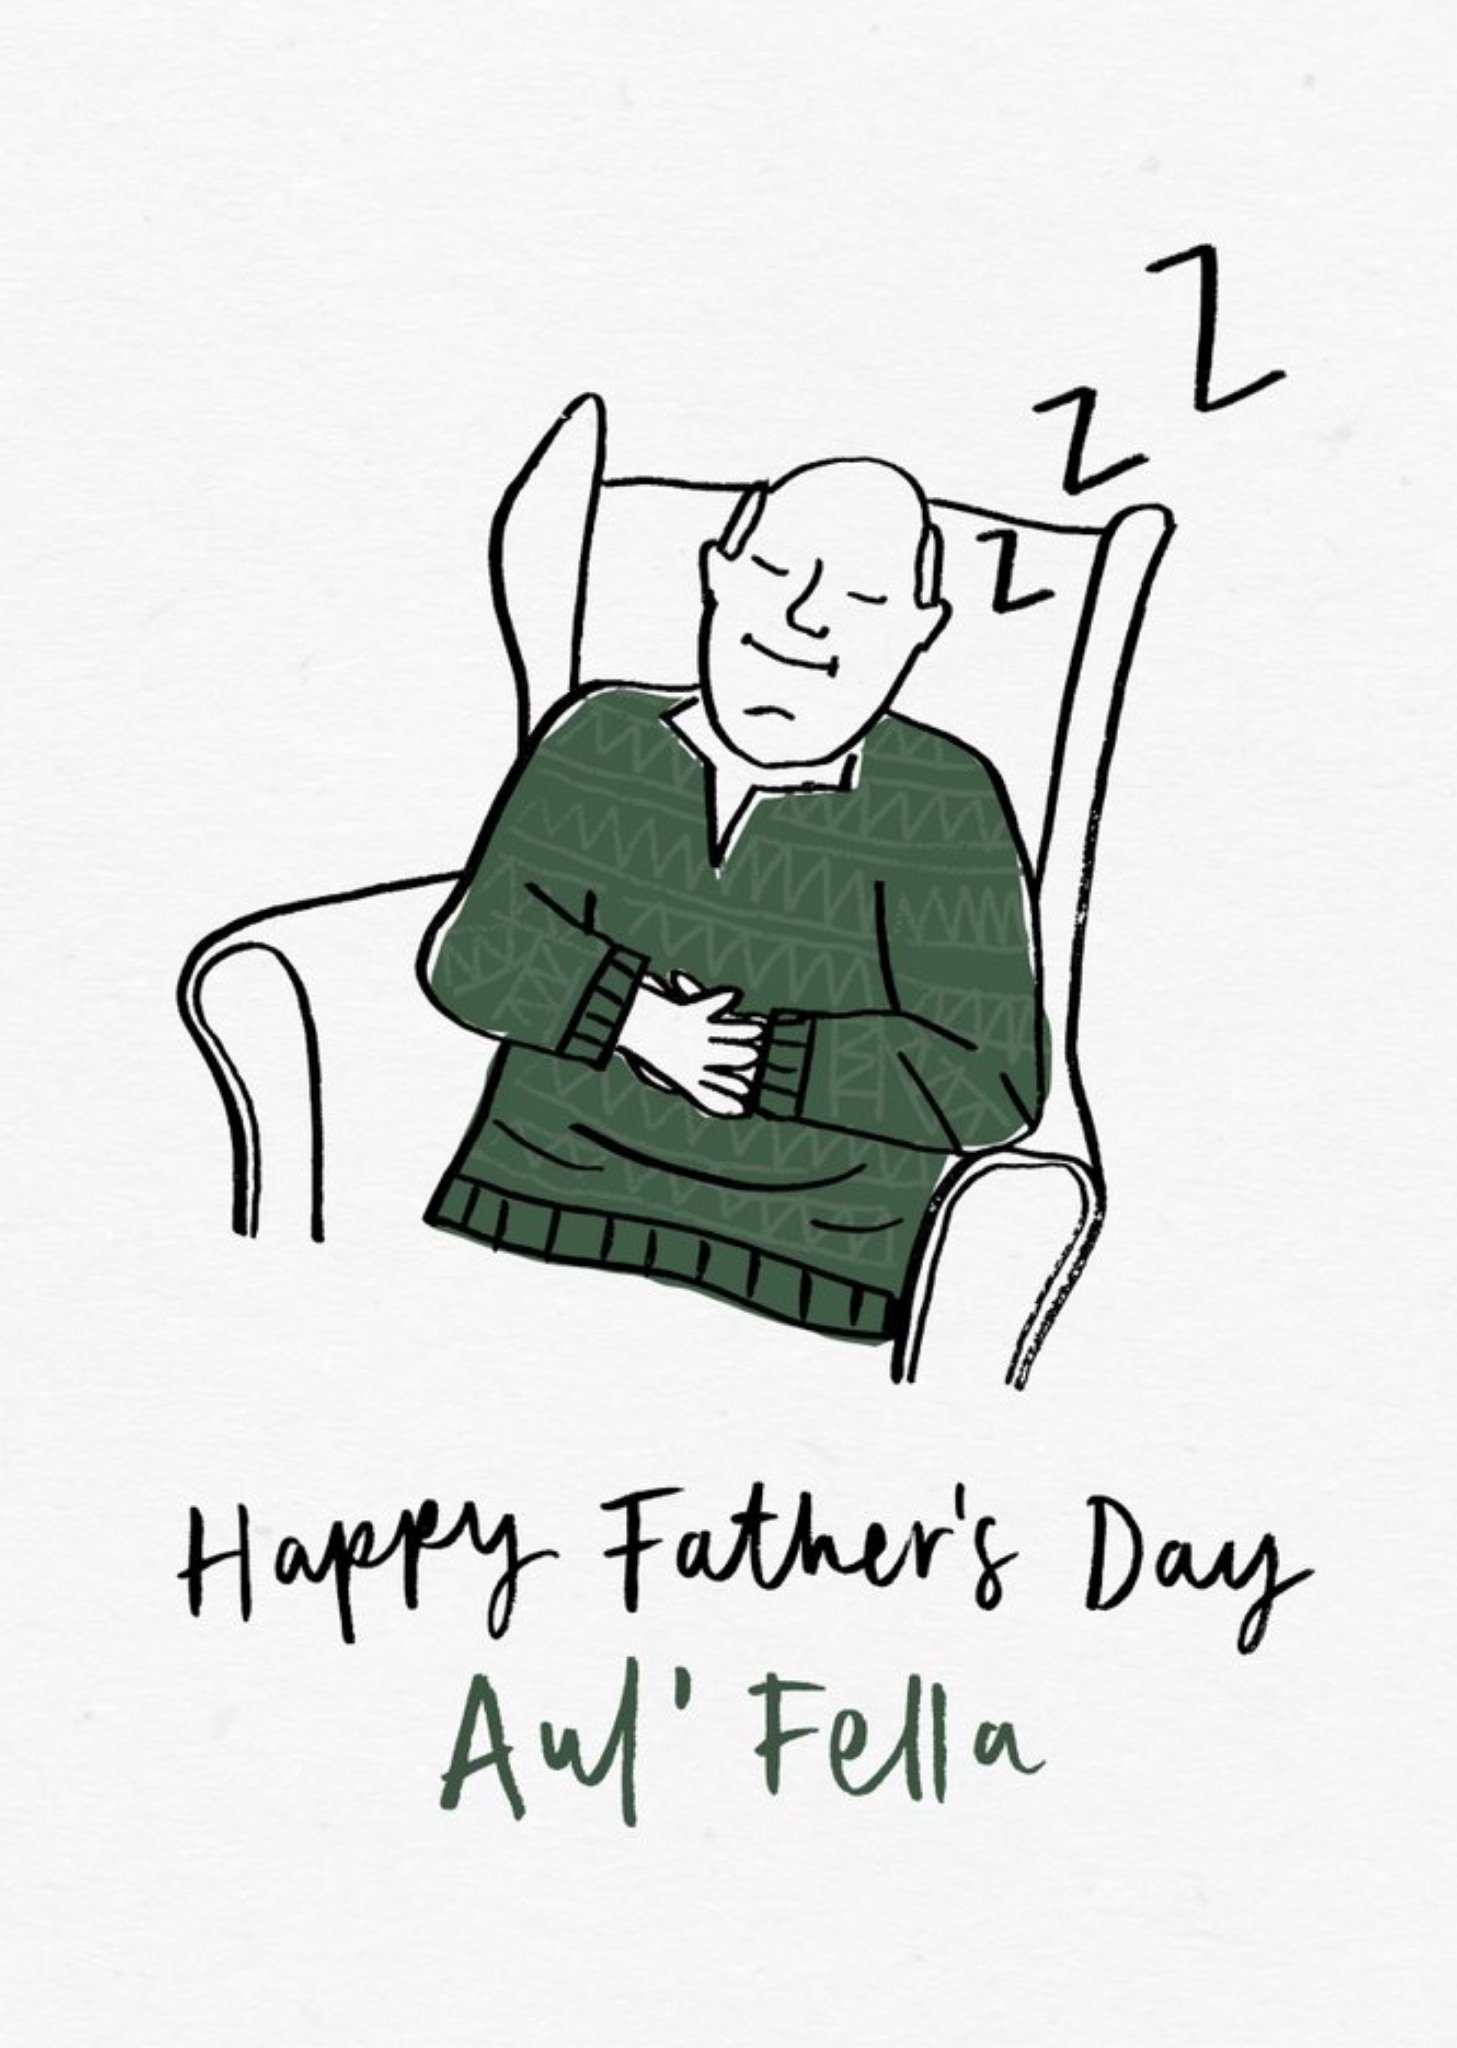 Moonpig Aul Fella Funny Doodle Illustrated Sleeping Man Father's Day Card Ecard